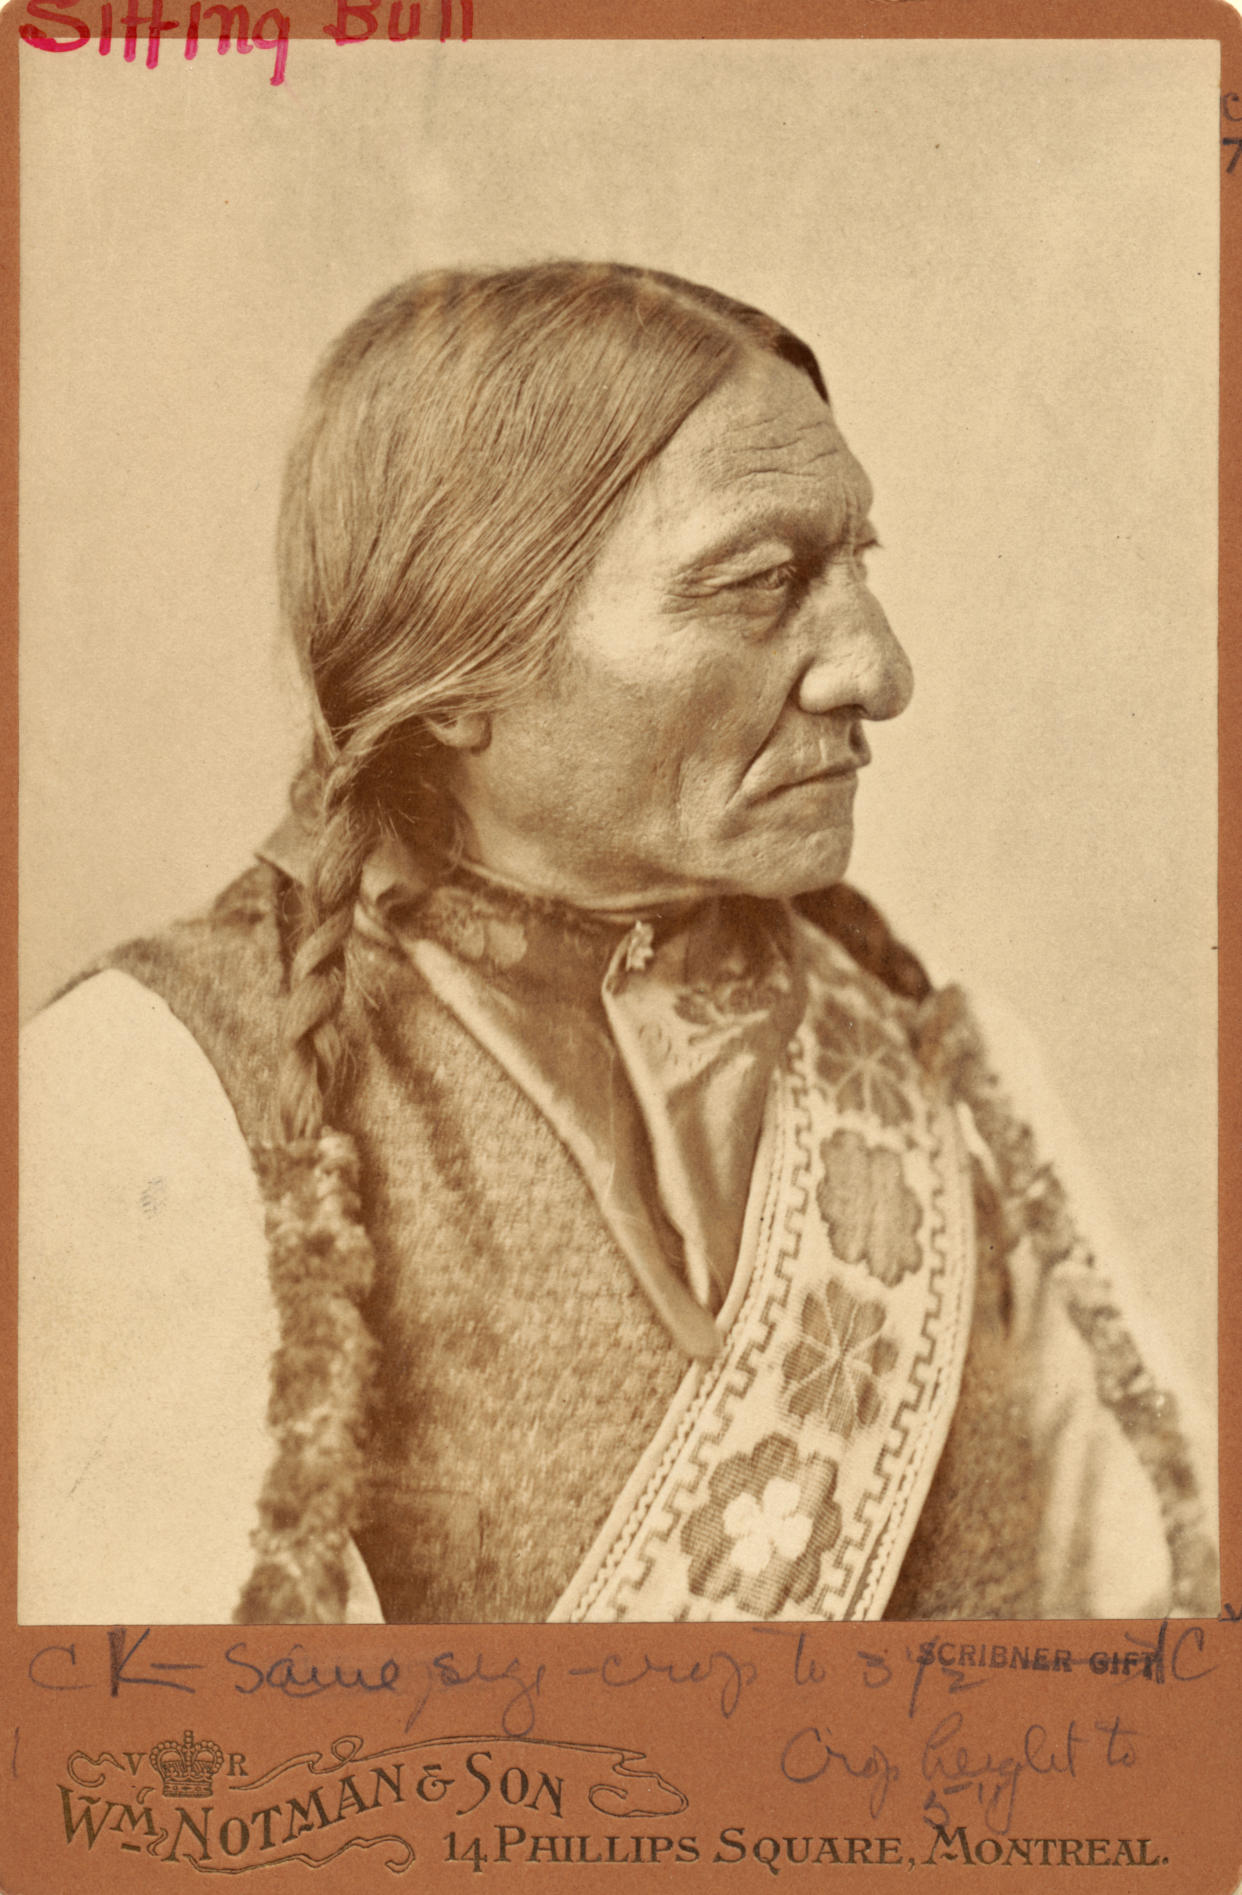 Sitting Bull circa 1885. (Smithsonian Institute)